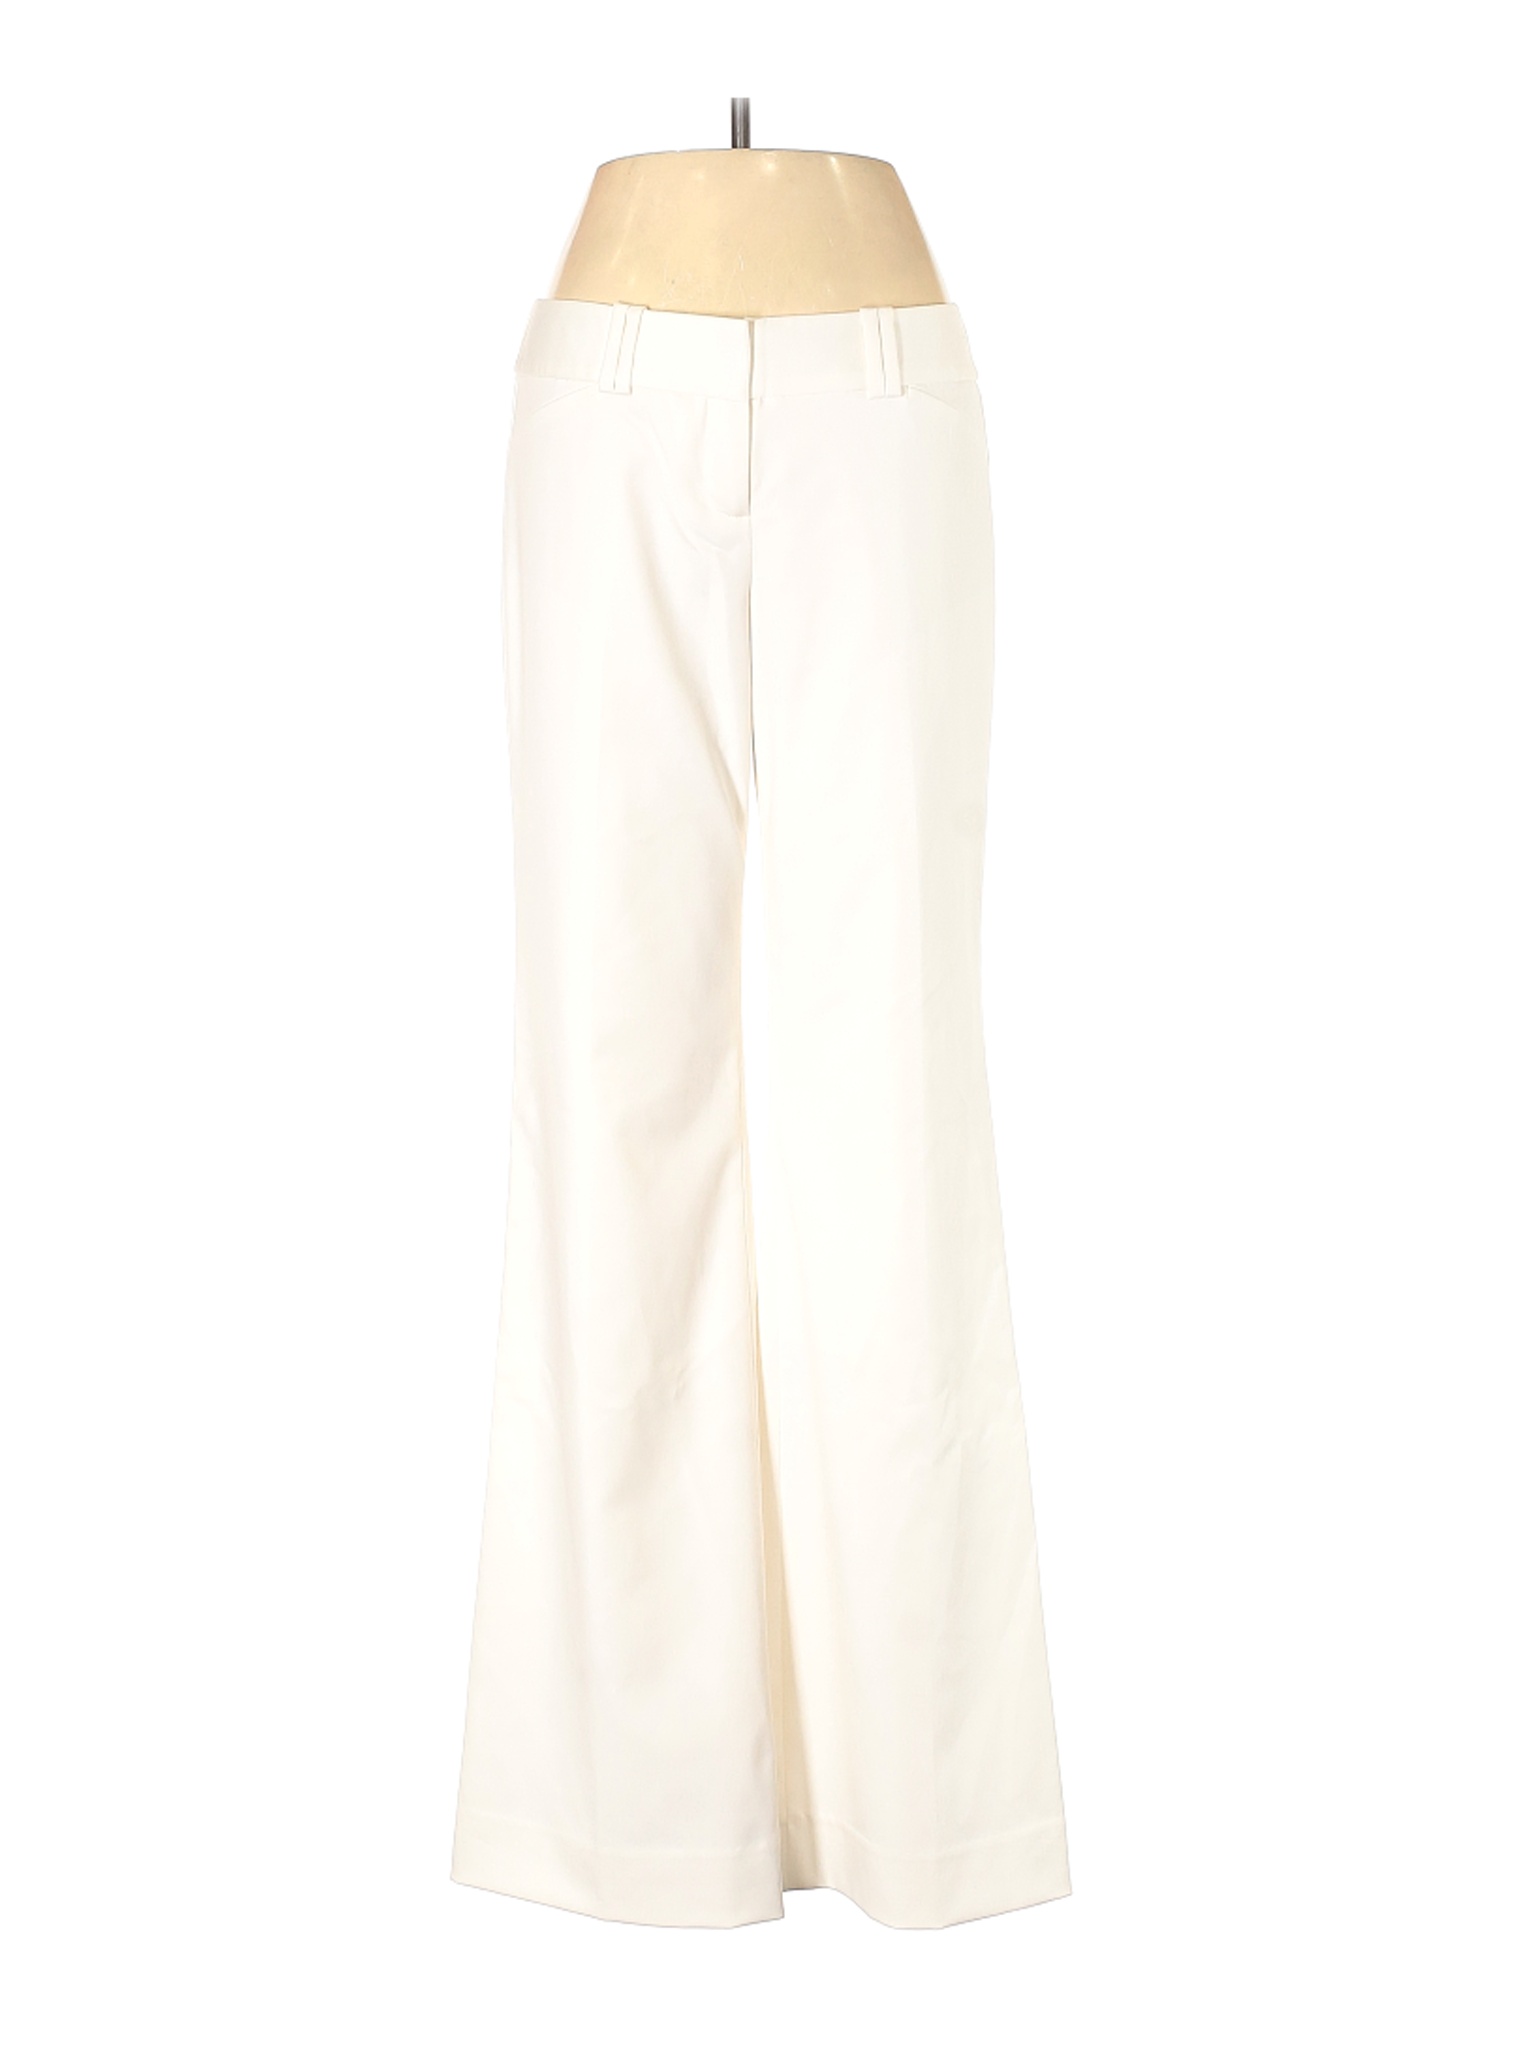 NWT The Limited Women Ivory Dress Pants 4 | eBay